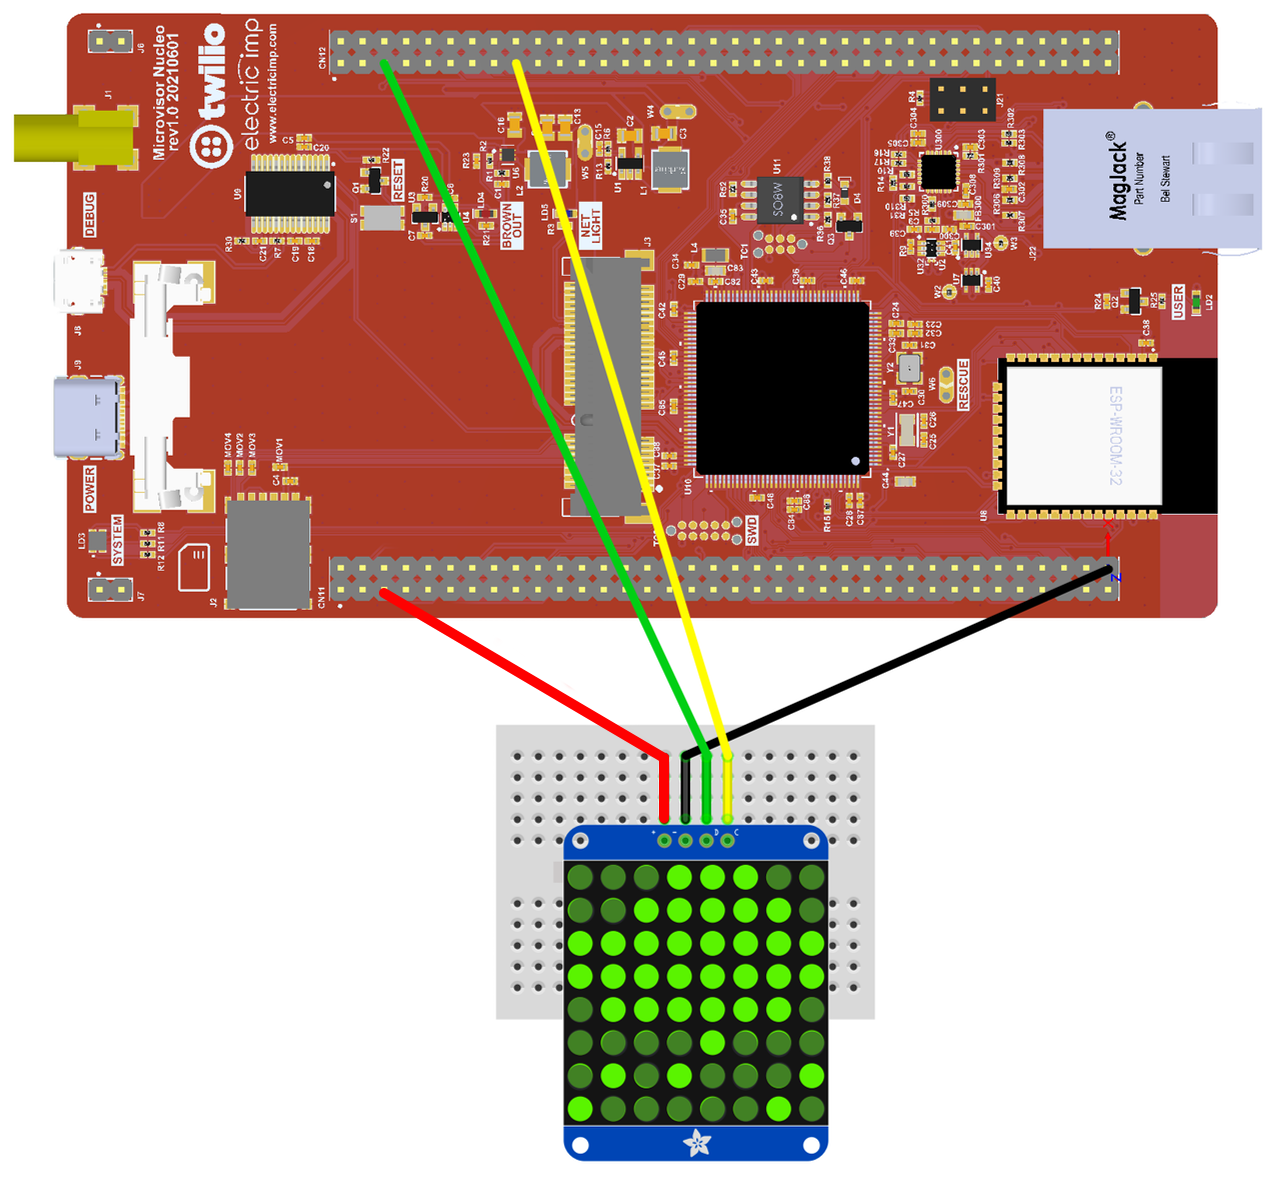 The Microvisor IOT device demo circuit